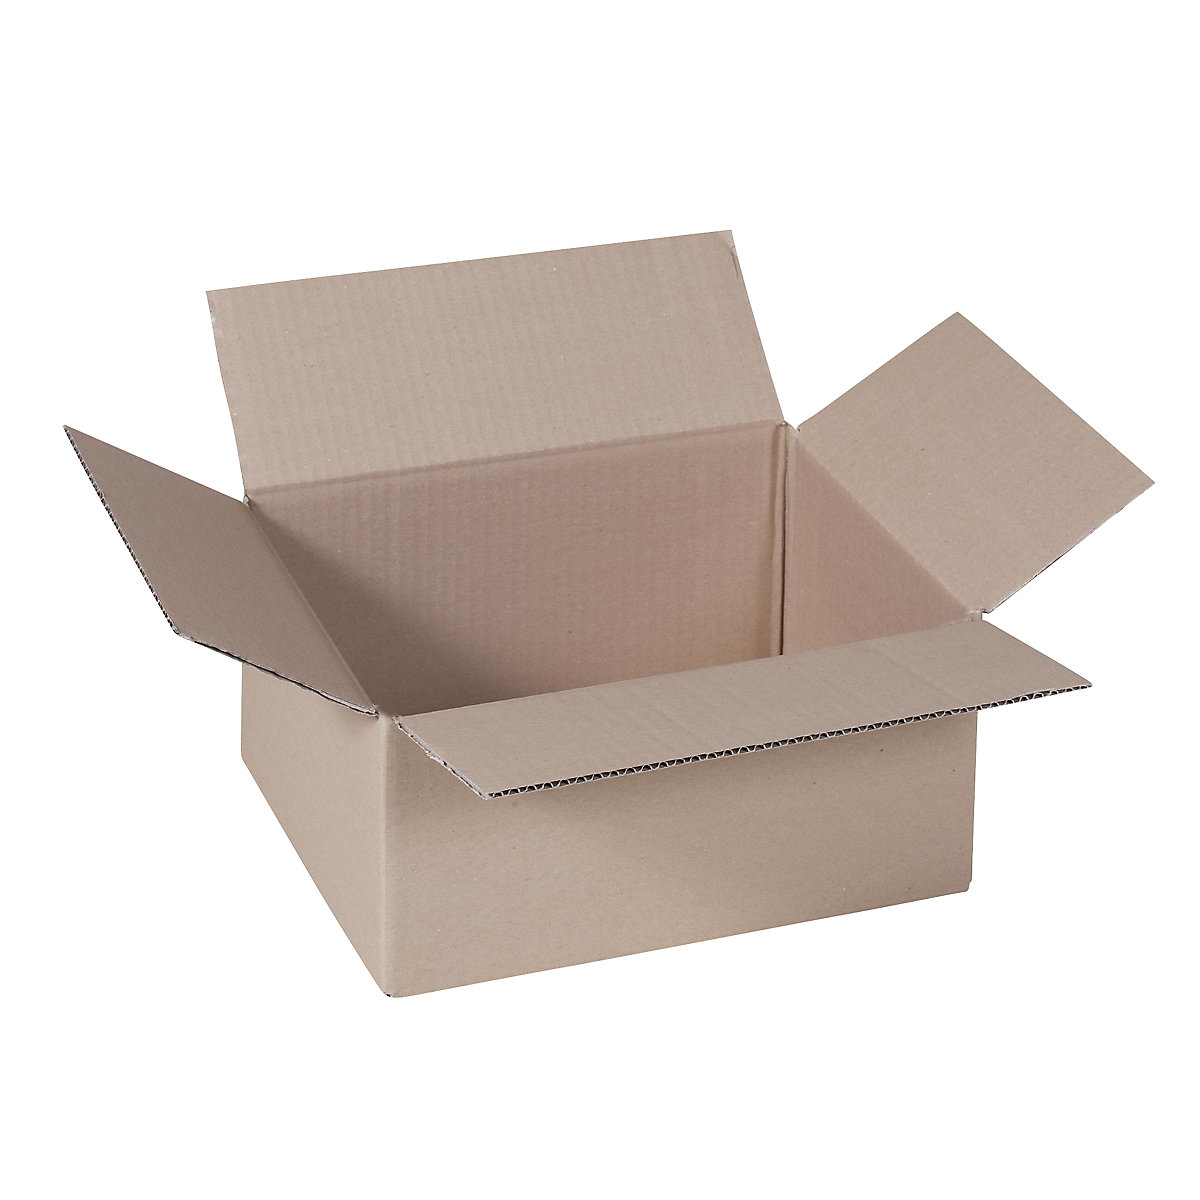 Folding cardboard box, FEFCO 0201, made of single fluted cardboard, internal dimensions 430 x 305 x 180 mm, pack of 50-9